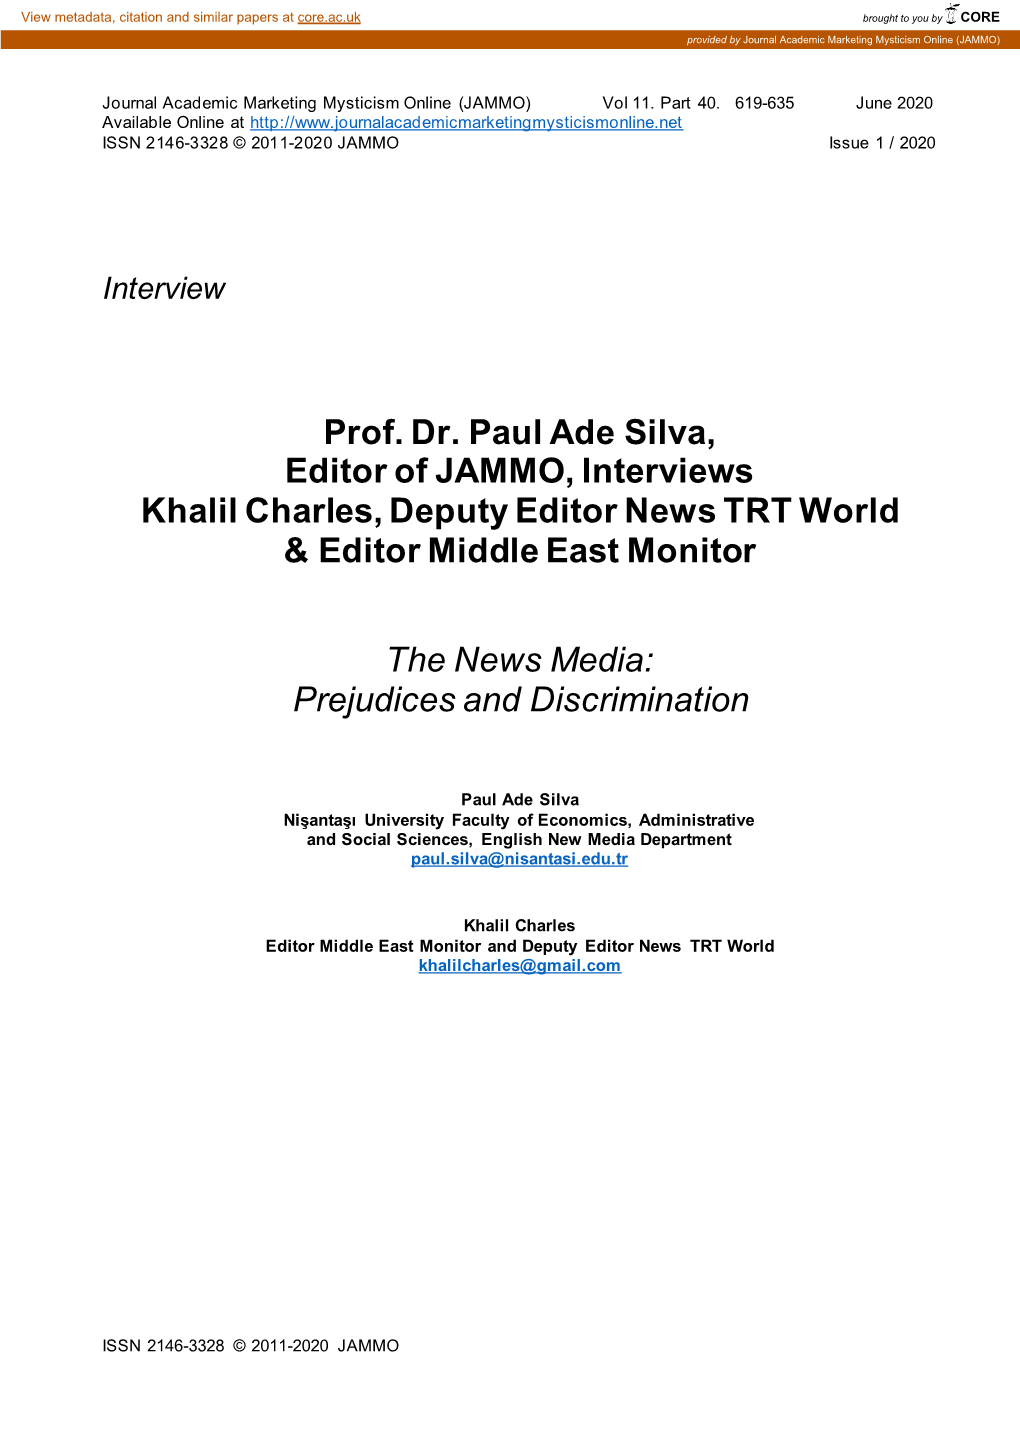 Prof. Dr. Paul Ade Silva, Editor of JAMMO, Interviews Khalil Charles, Deputy Editor News TRT World & Editor Middle East Monitor